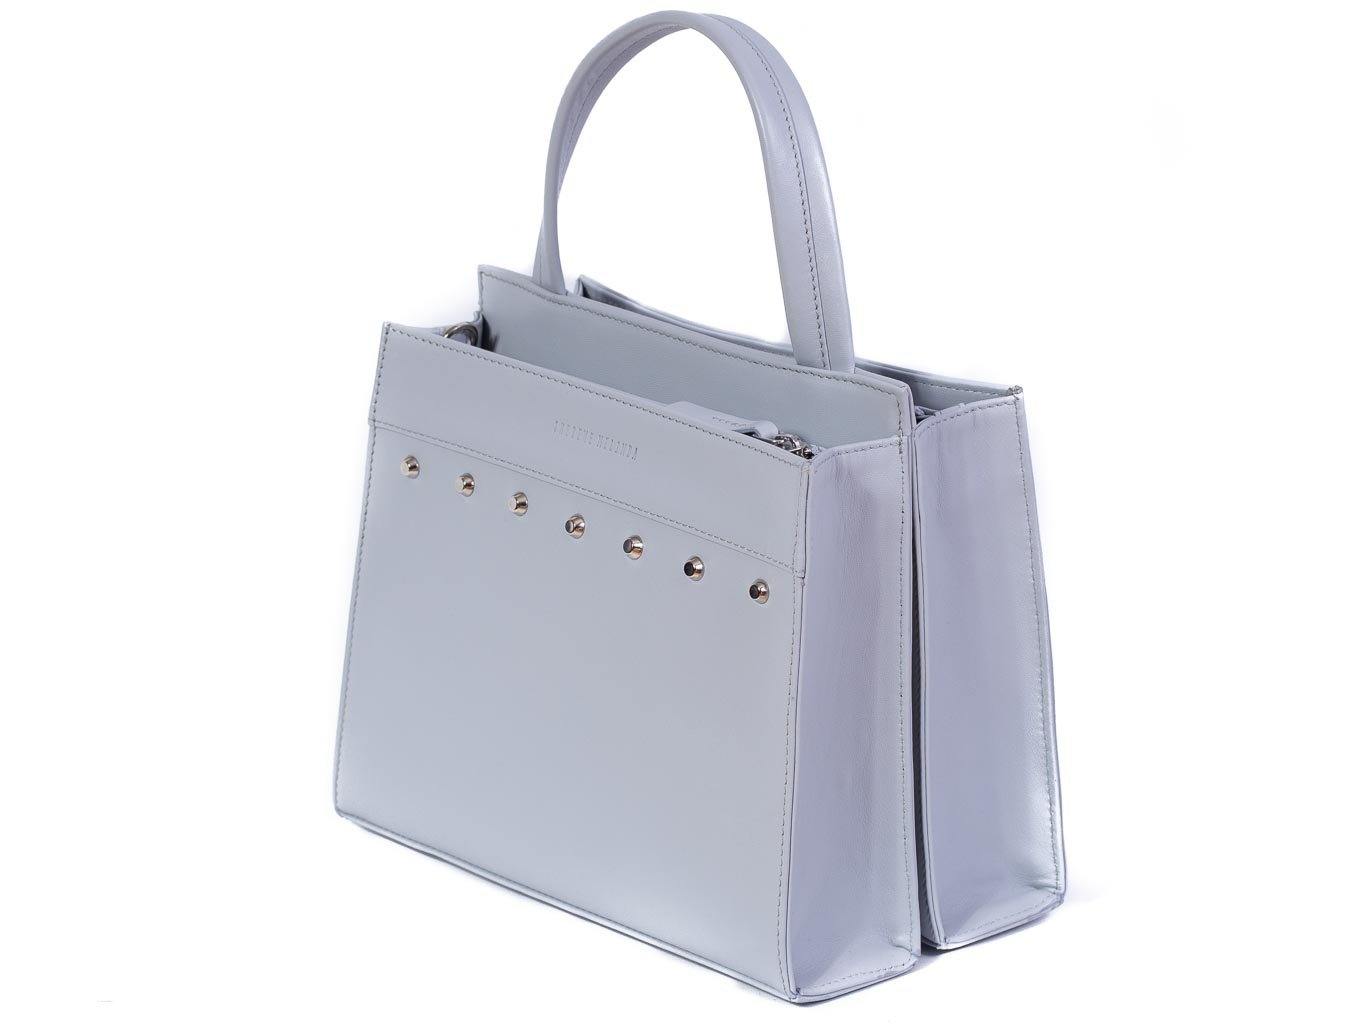 Top Handle Studded Handbag in Baby Blue by Sherene Melinda side angle